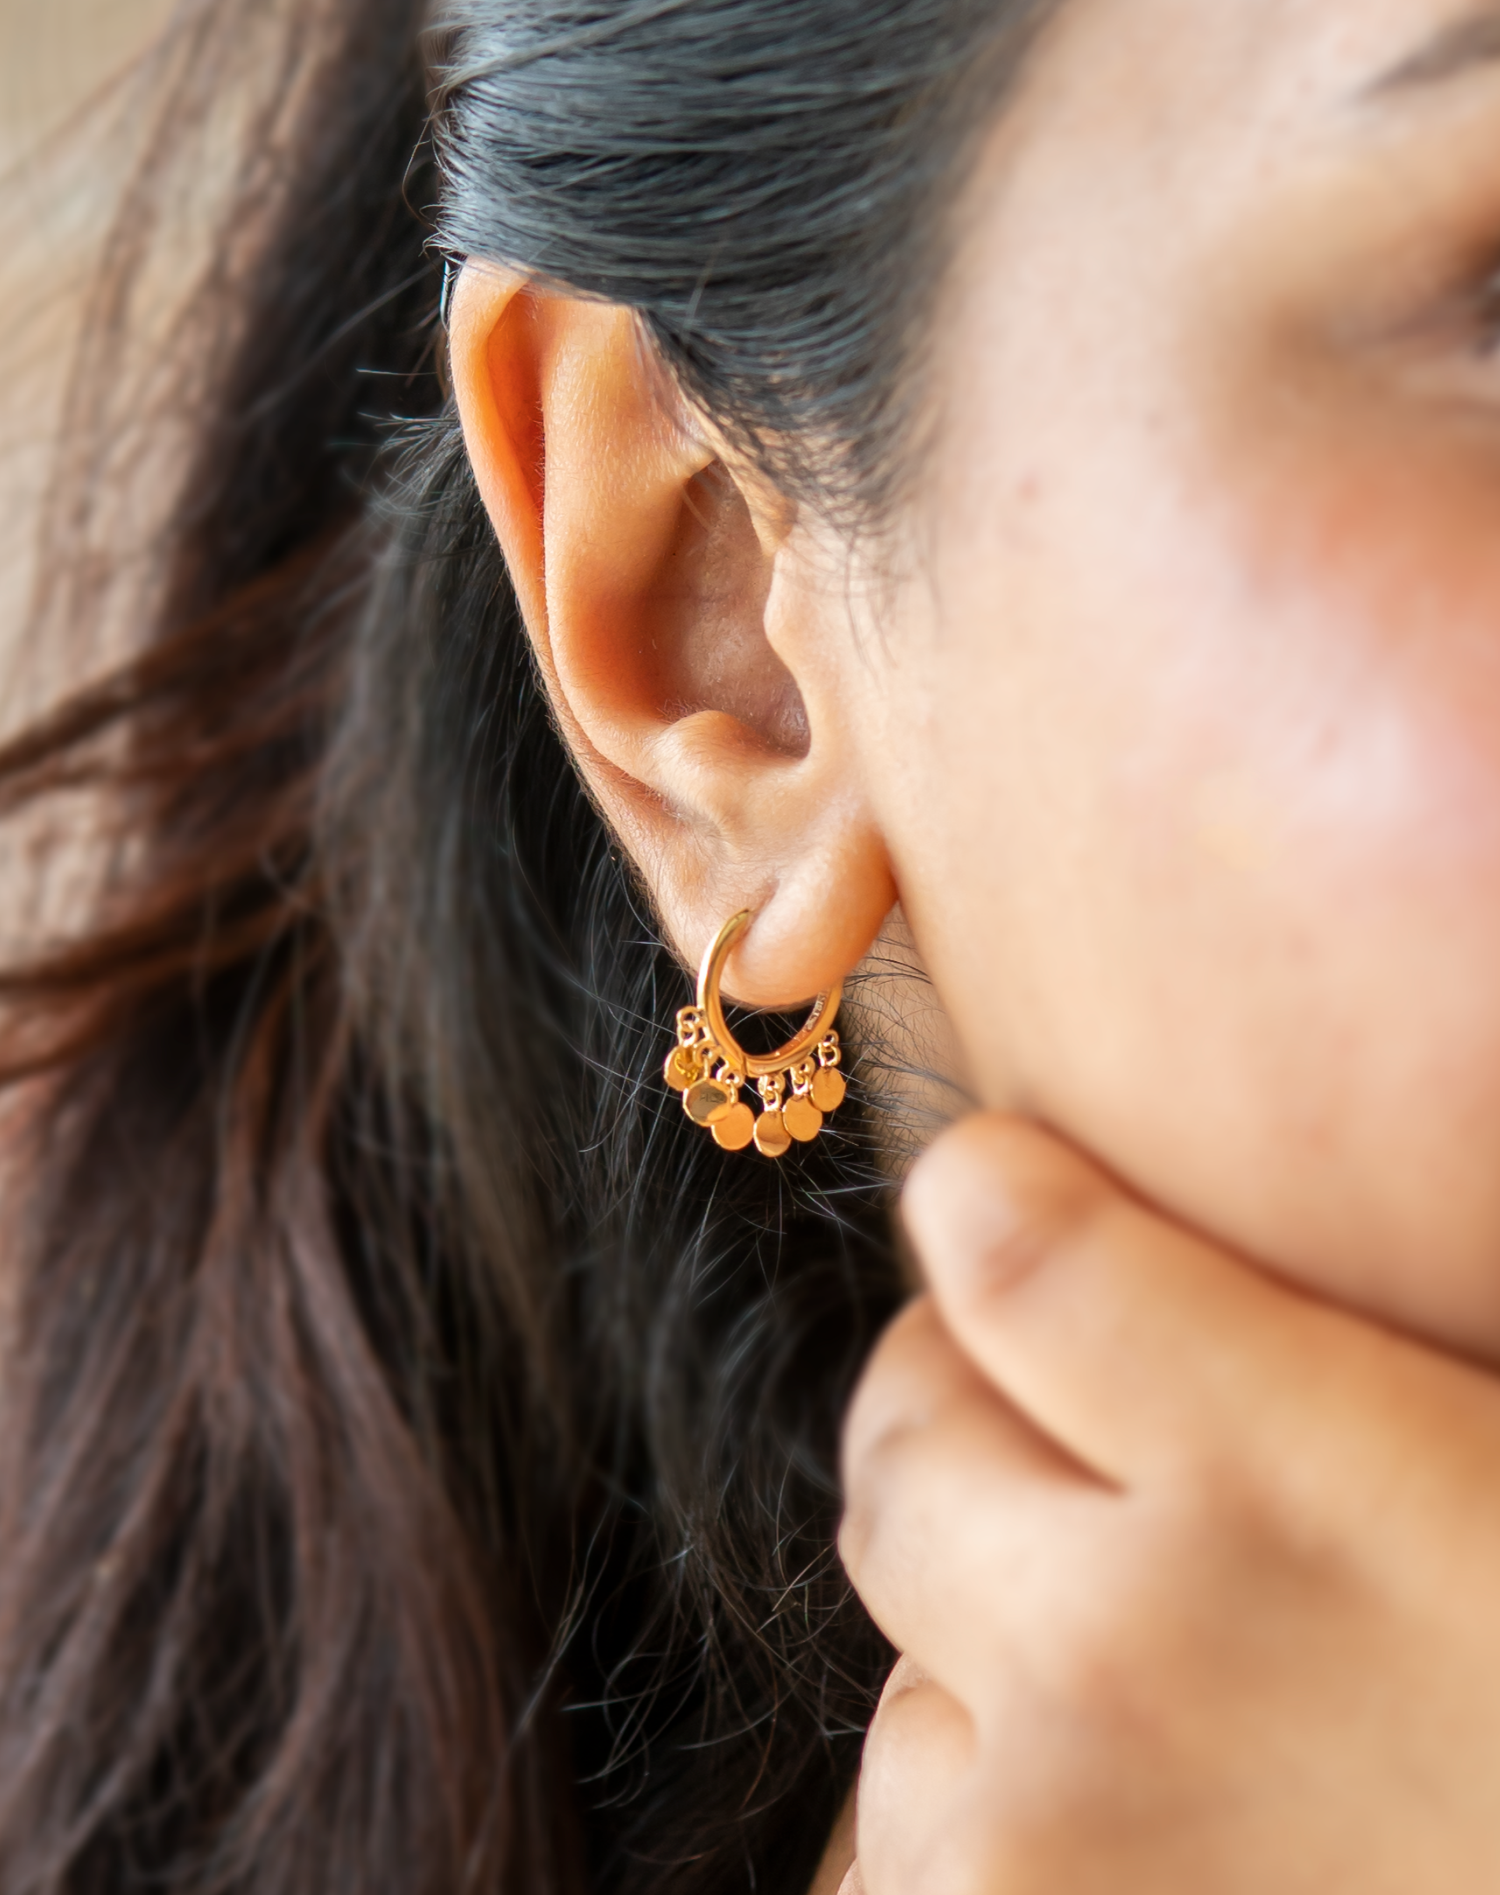 Ring Earrings Earrings | Earrings, Simple earrings, Fun earrings